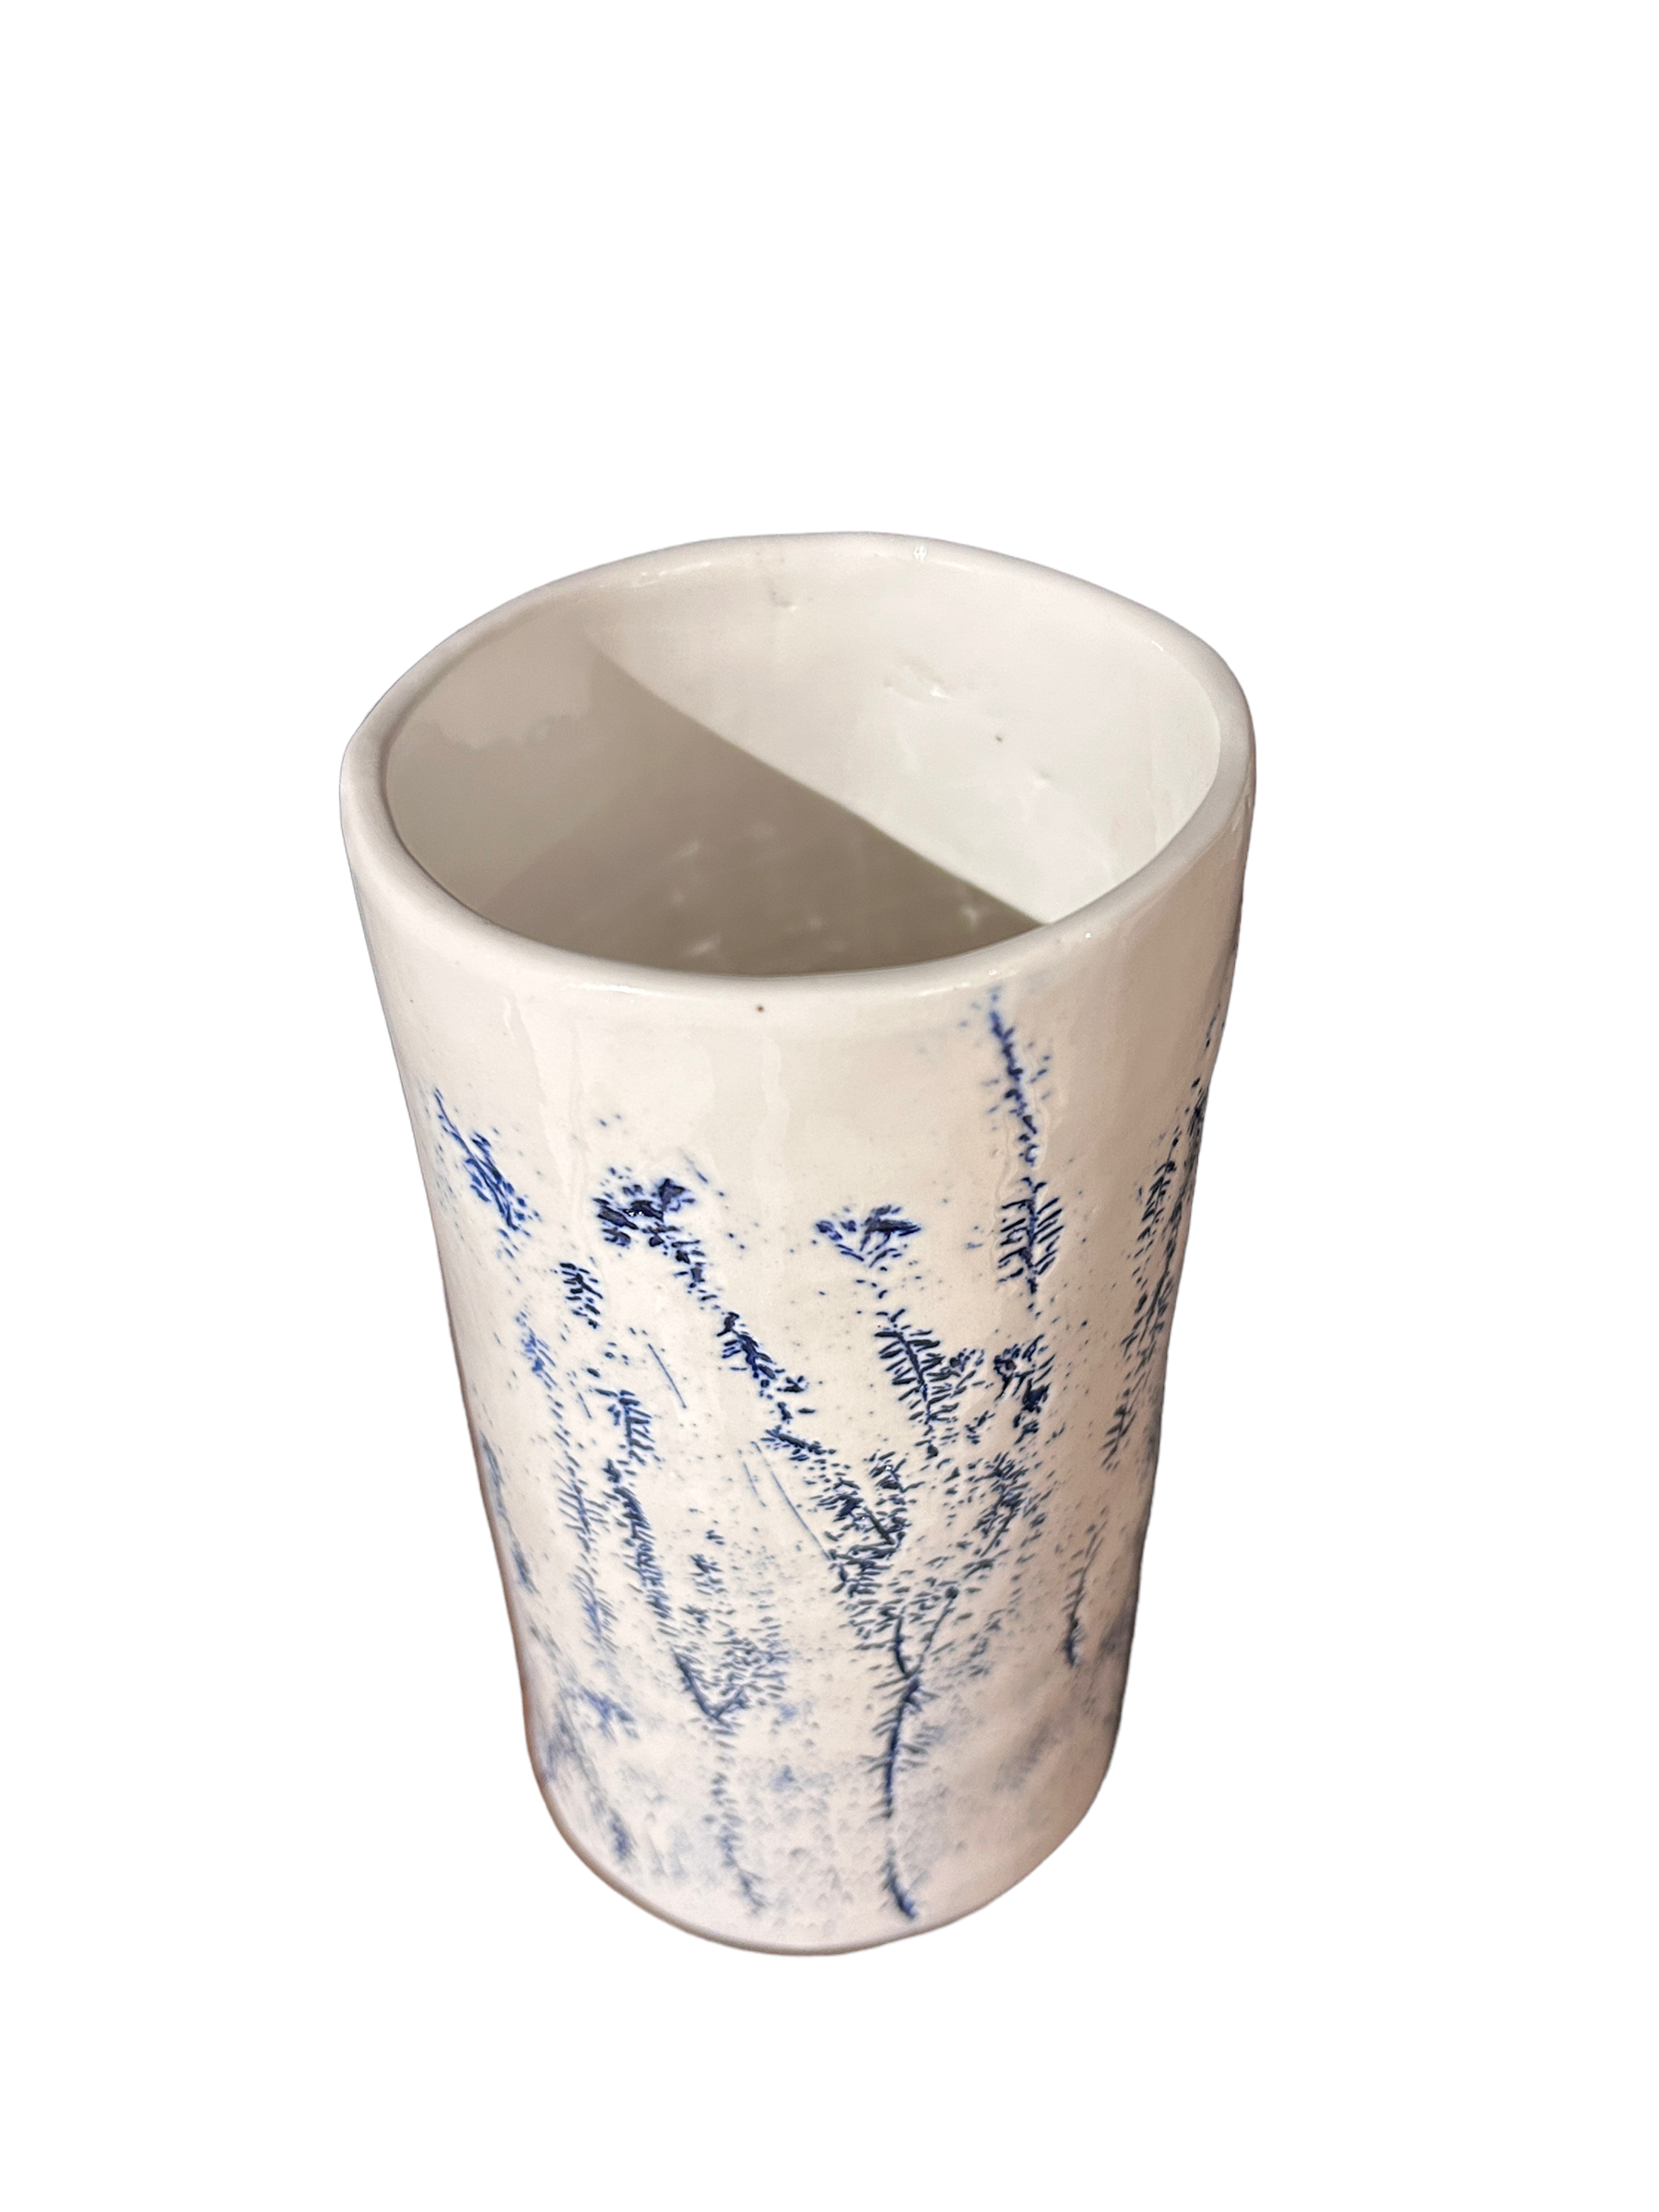 Cobalt Blue Fynbos vase